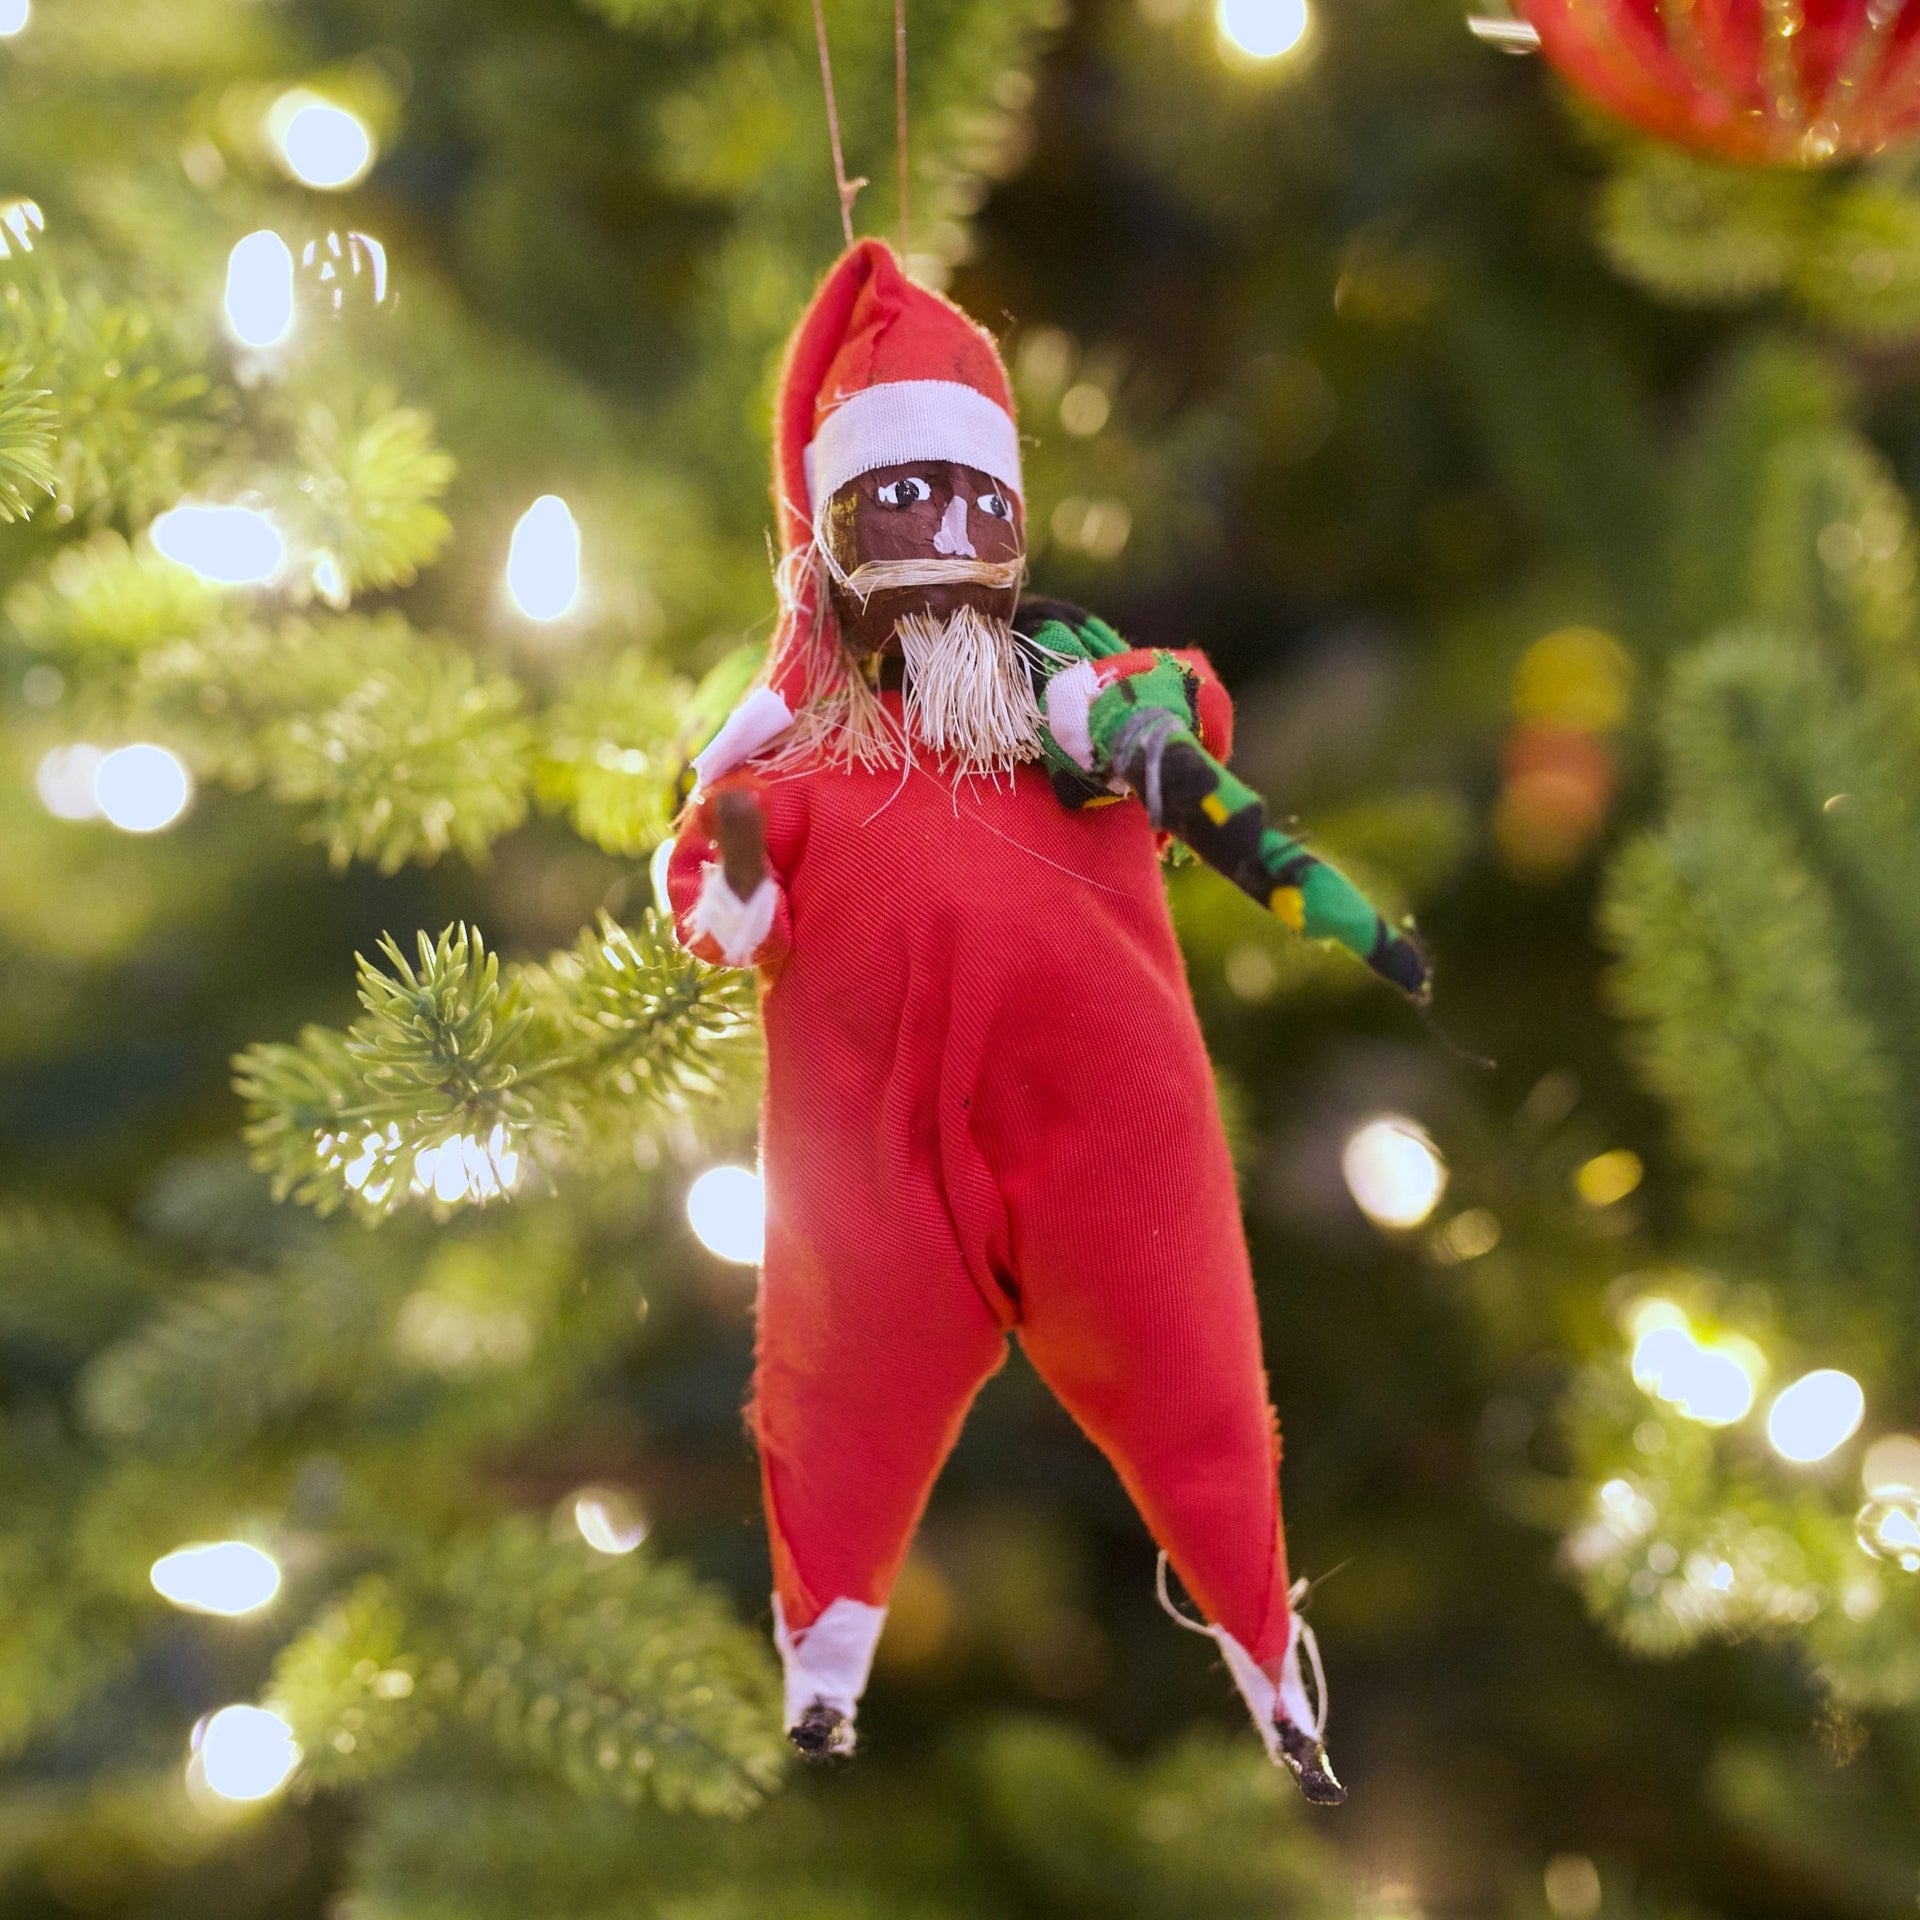 Handmade black Santa ornament from Africa hanging on Christmas tree